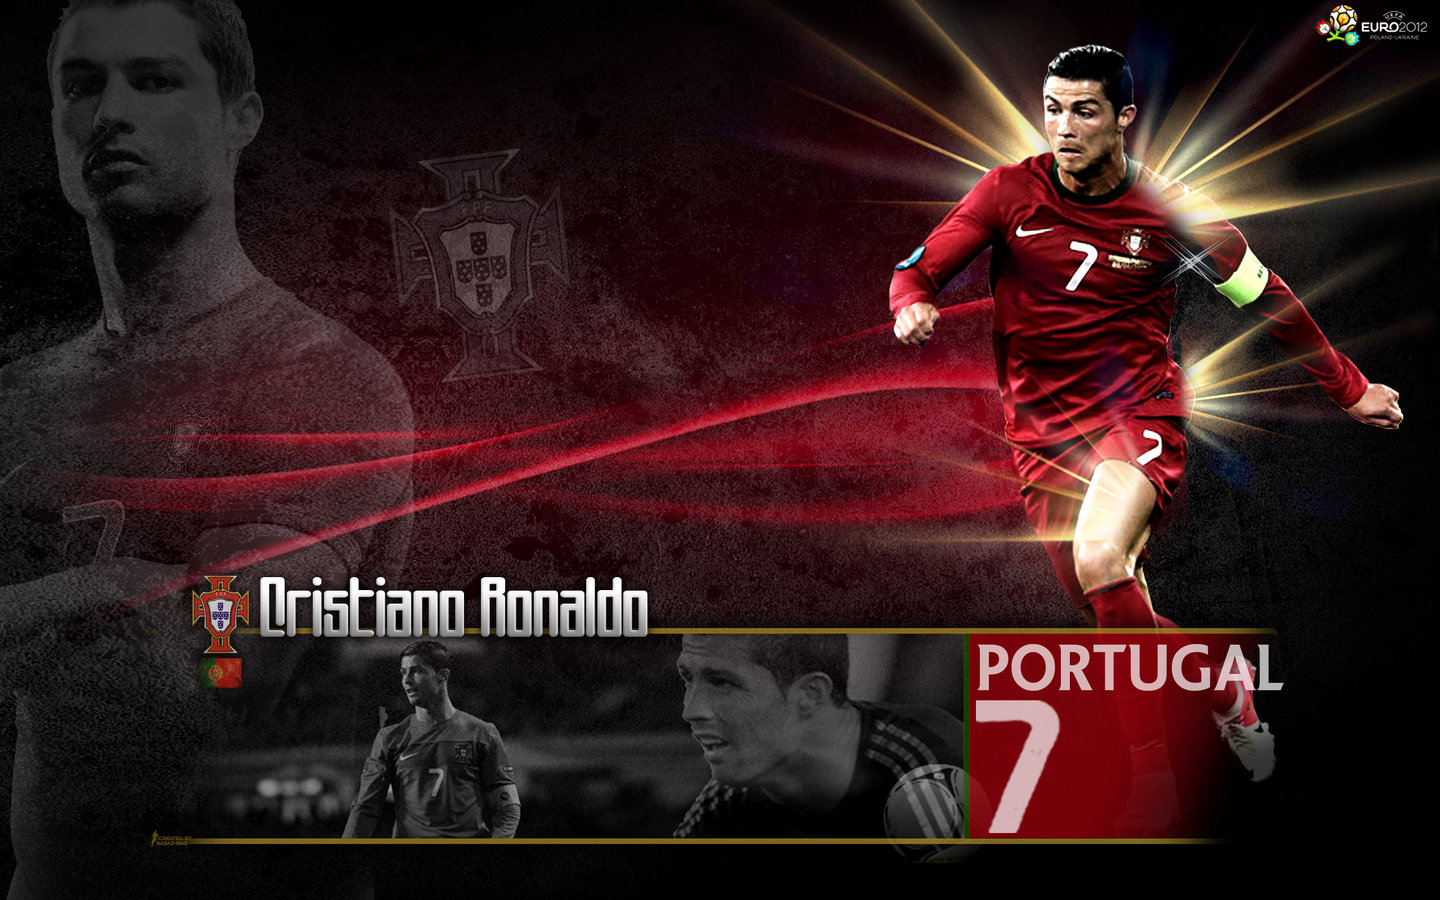 Cristiano Ronaldo Portugal World Cup Background iPhone Wallpaper